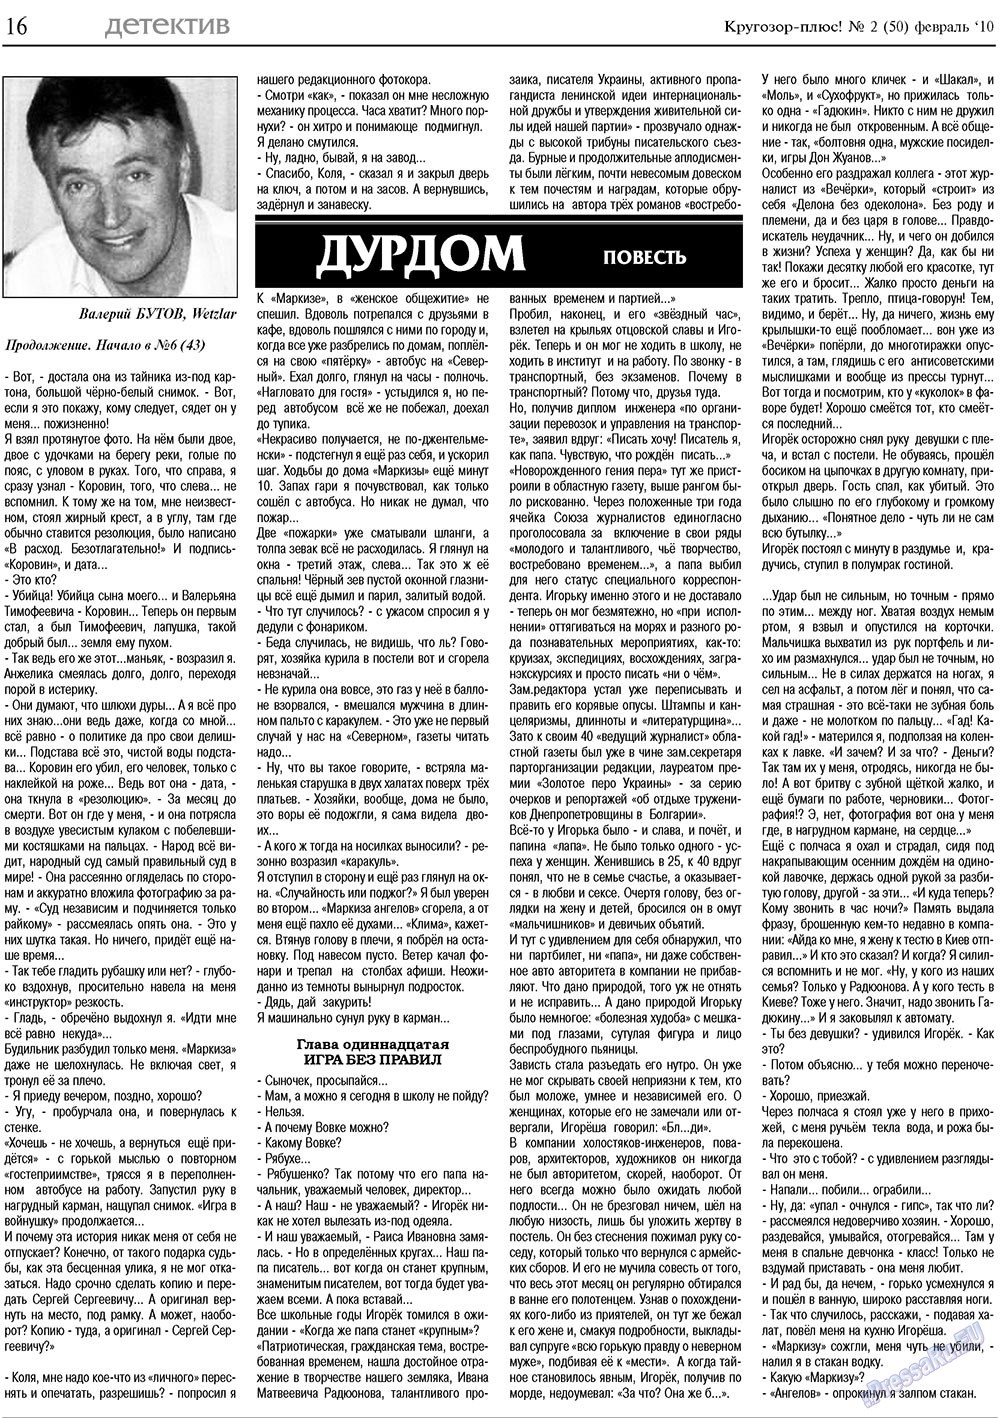 Кругозор плюс! (газета). 2010 год, номер 2, стр. 16